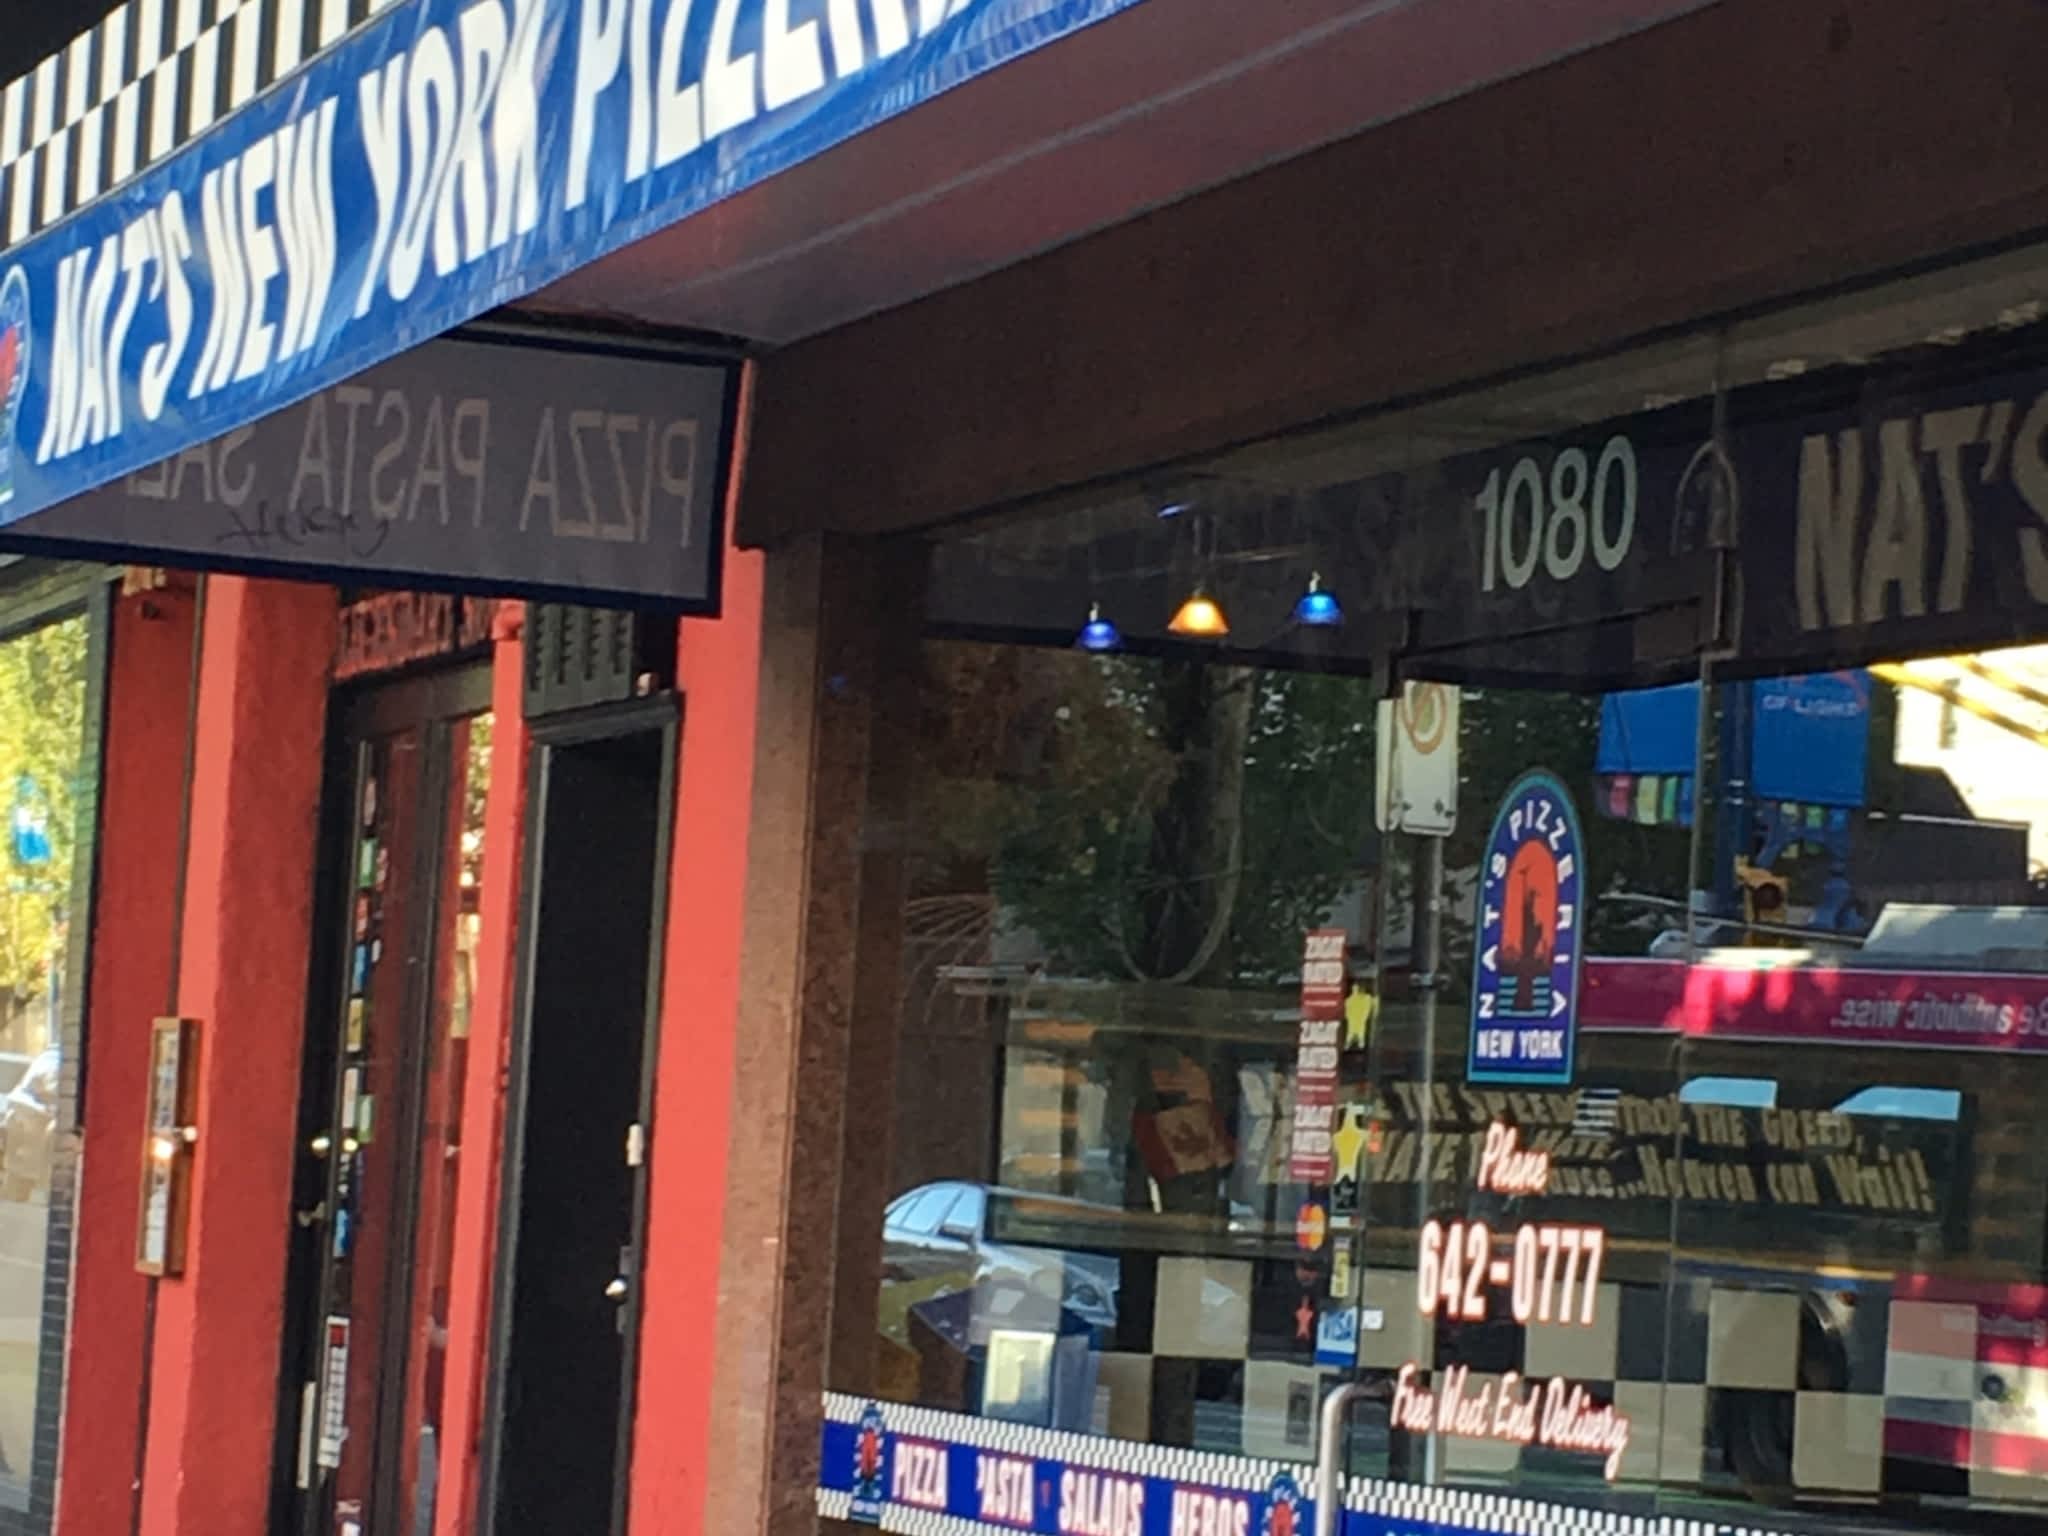 photo Nat's New York Pizzaria